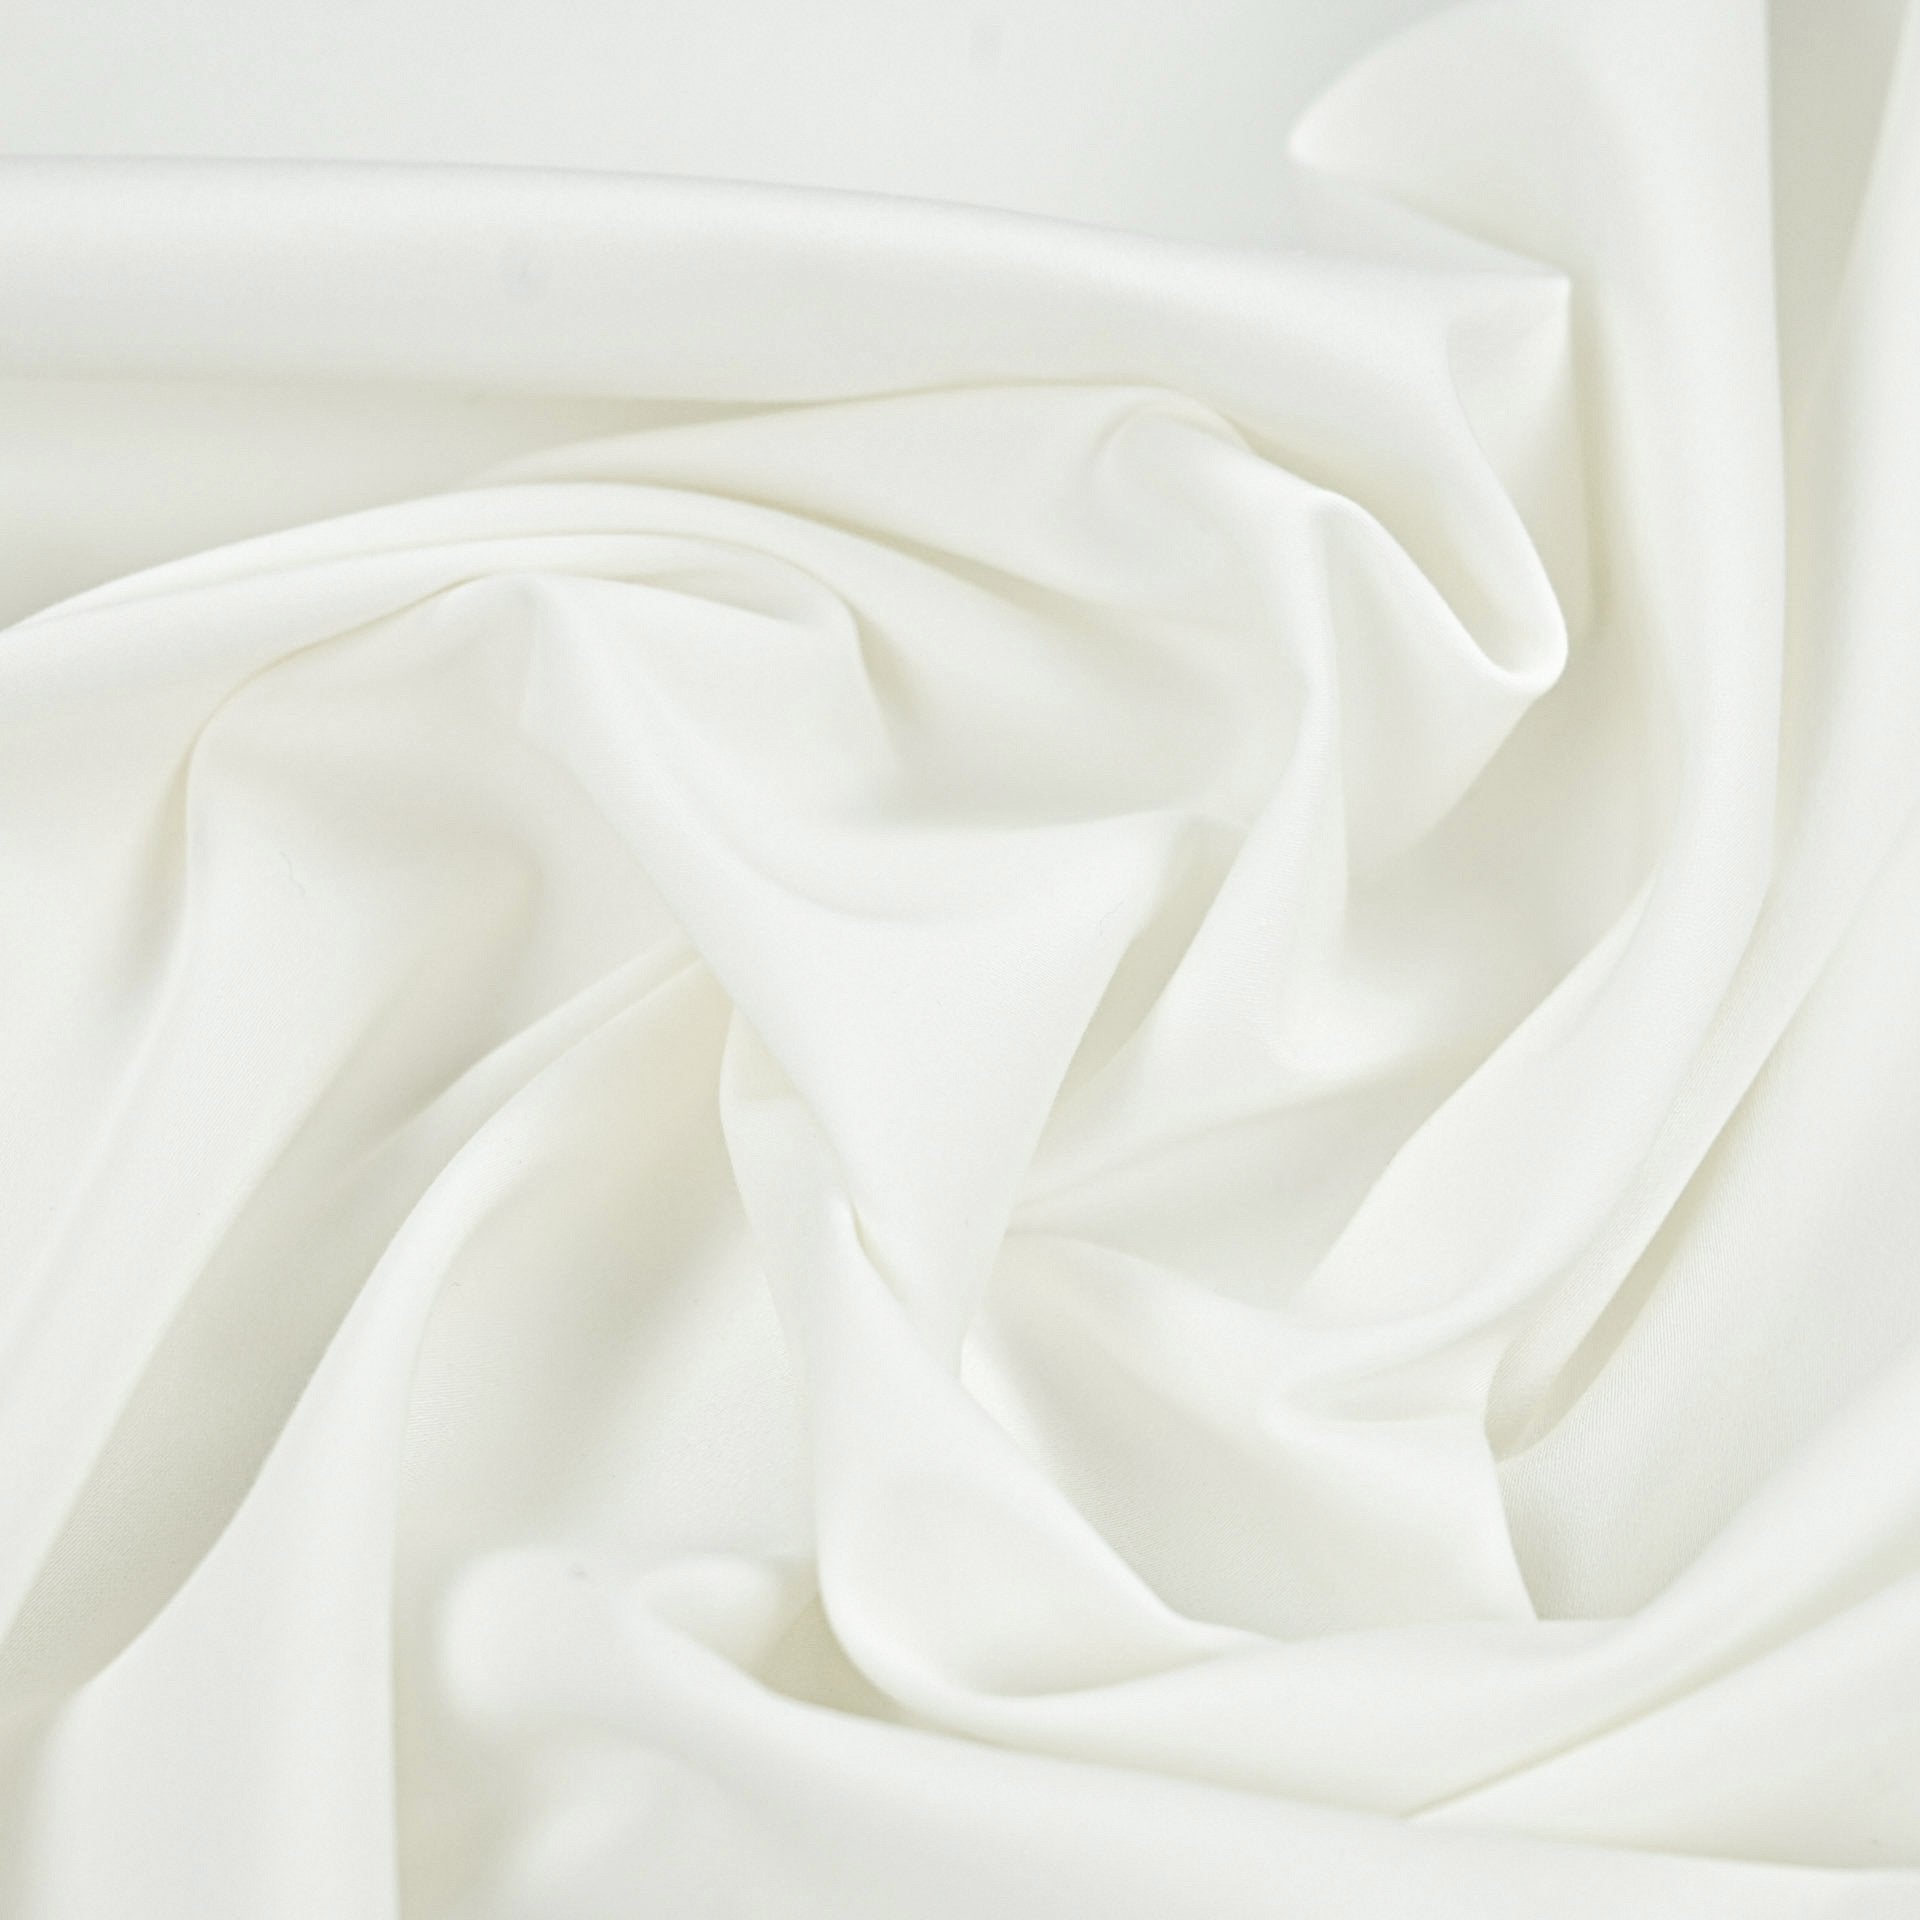 White Stretch Fabric 99829